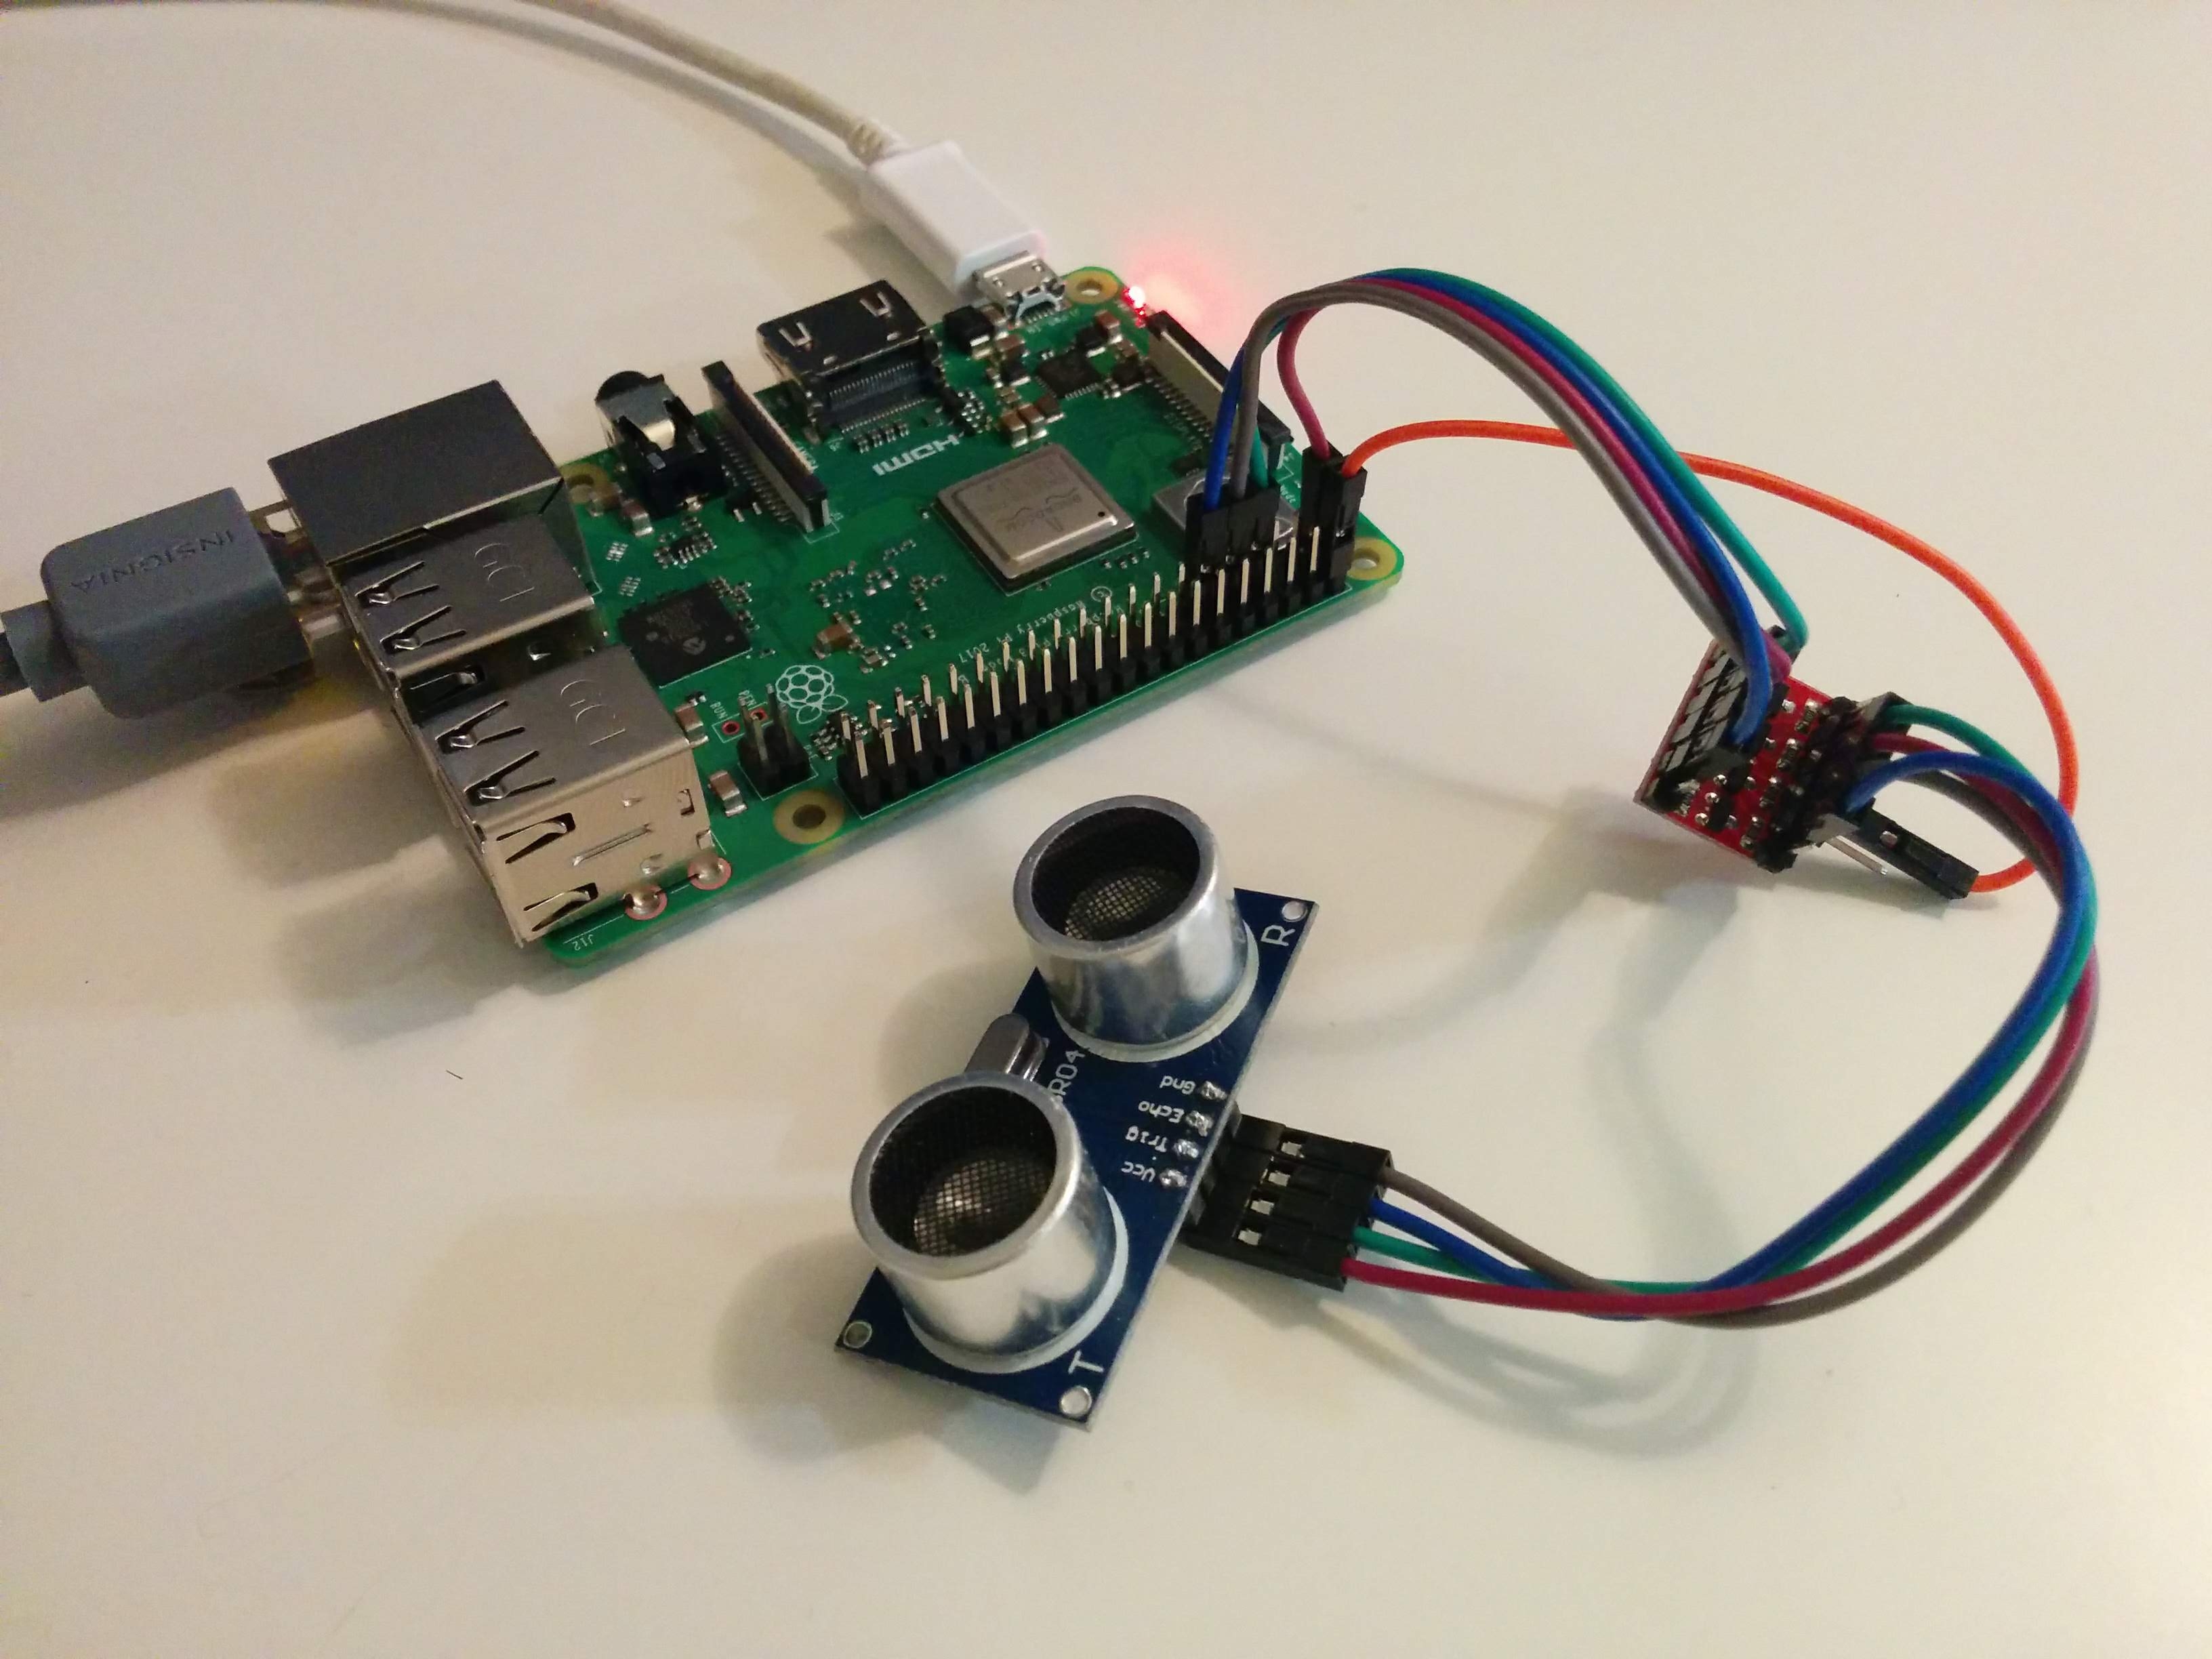 Ultrasonic Sensor on Raspberry Pi